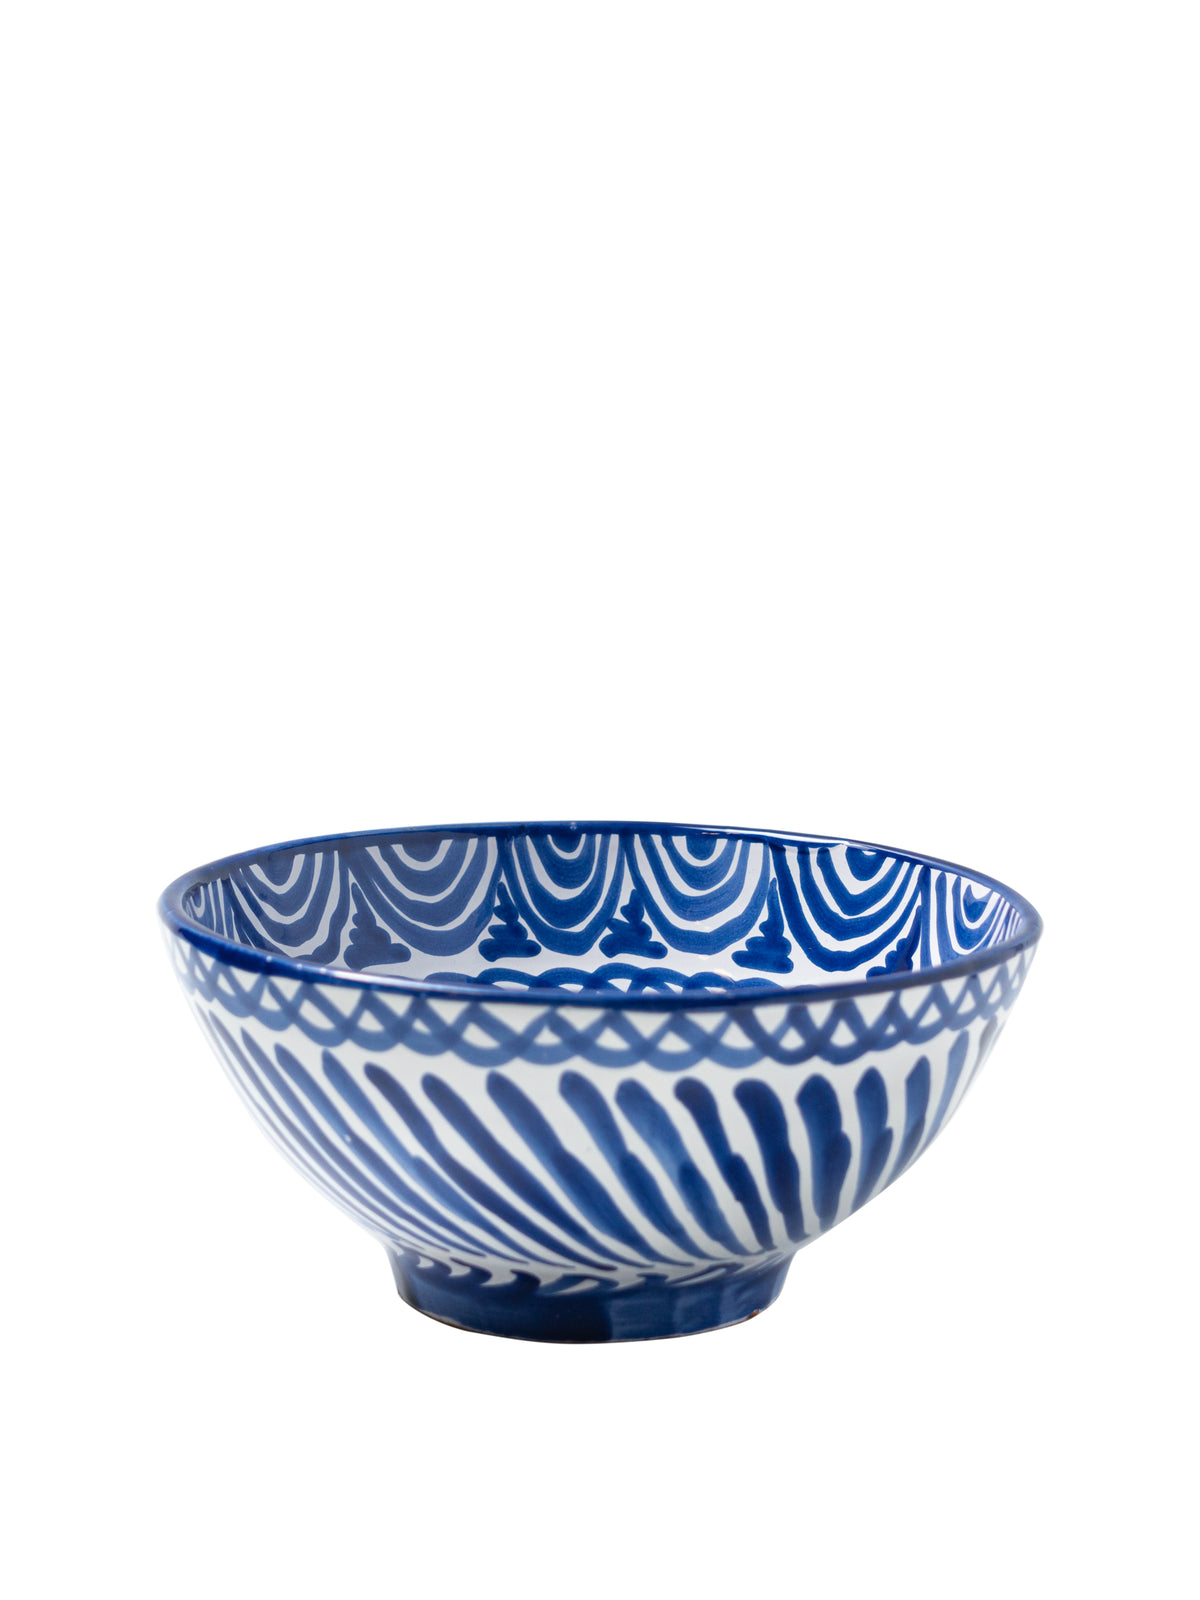 Casa Azul Medium Bowl with Hand-painted Designs